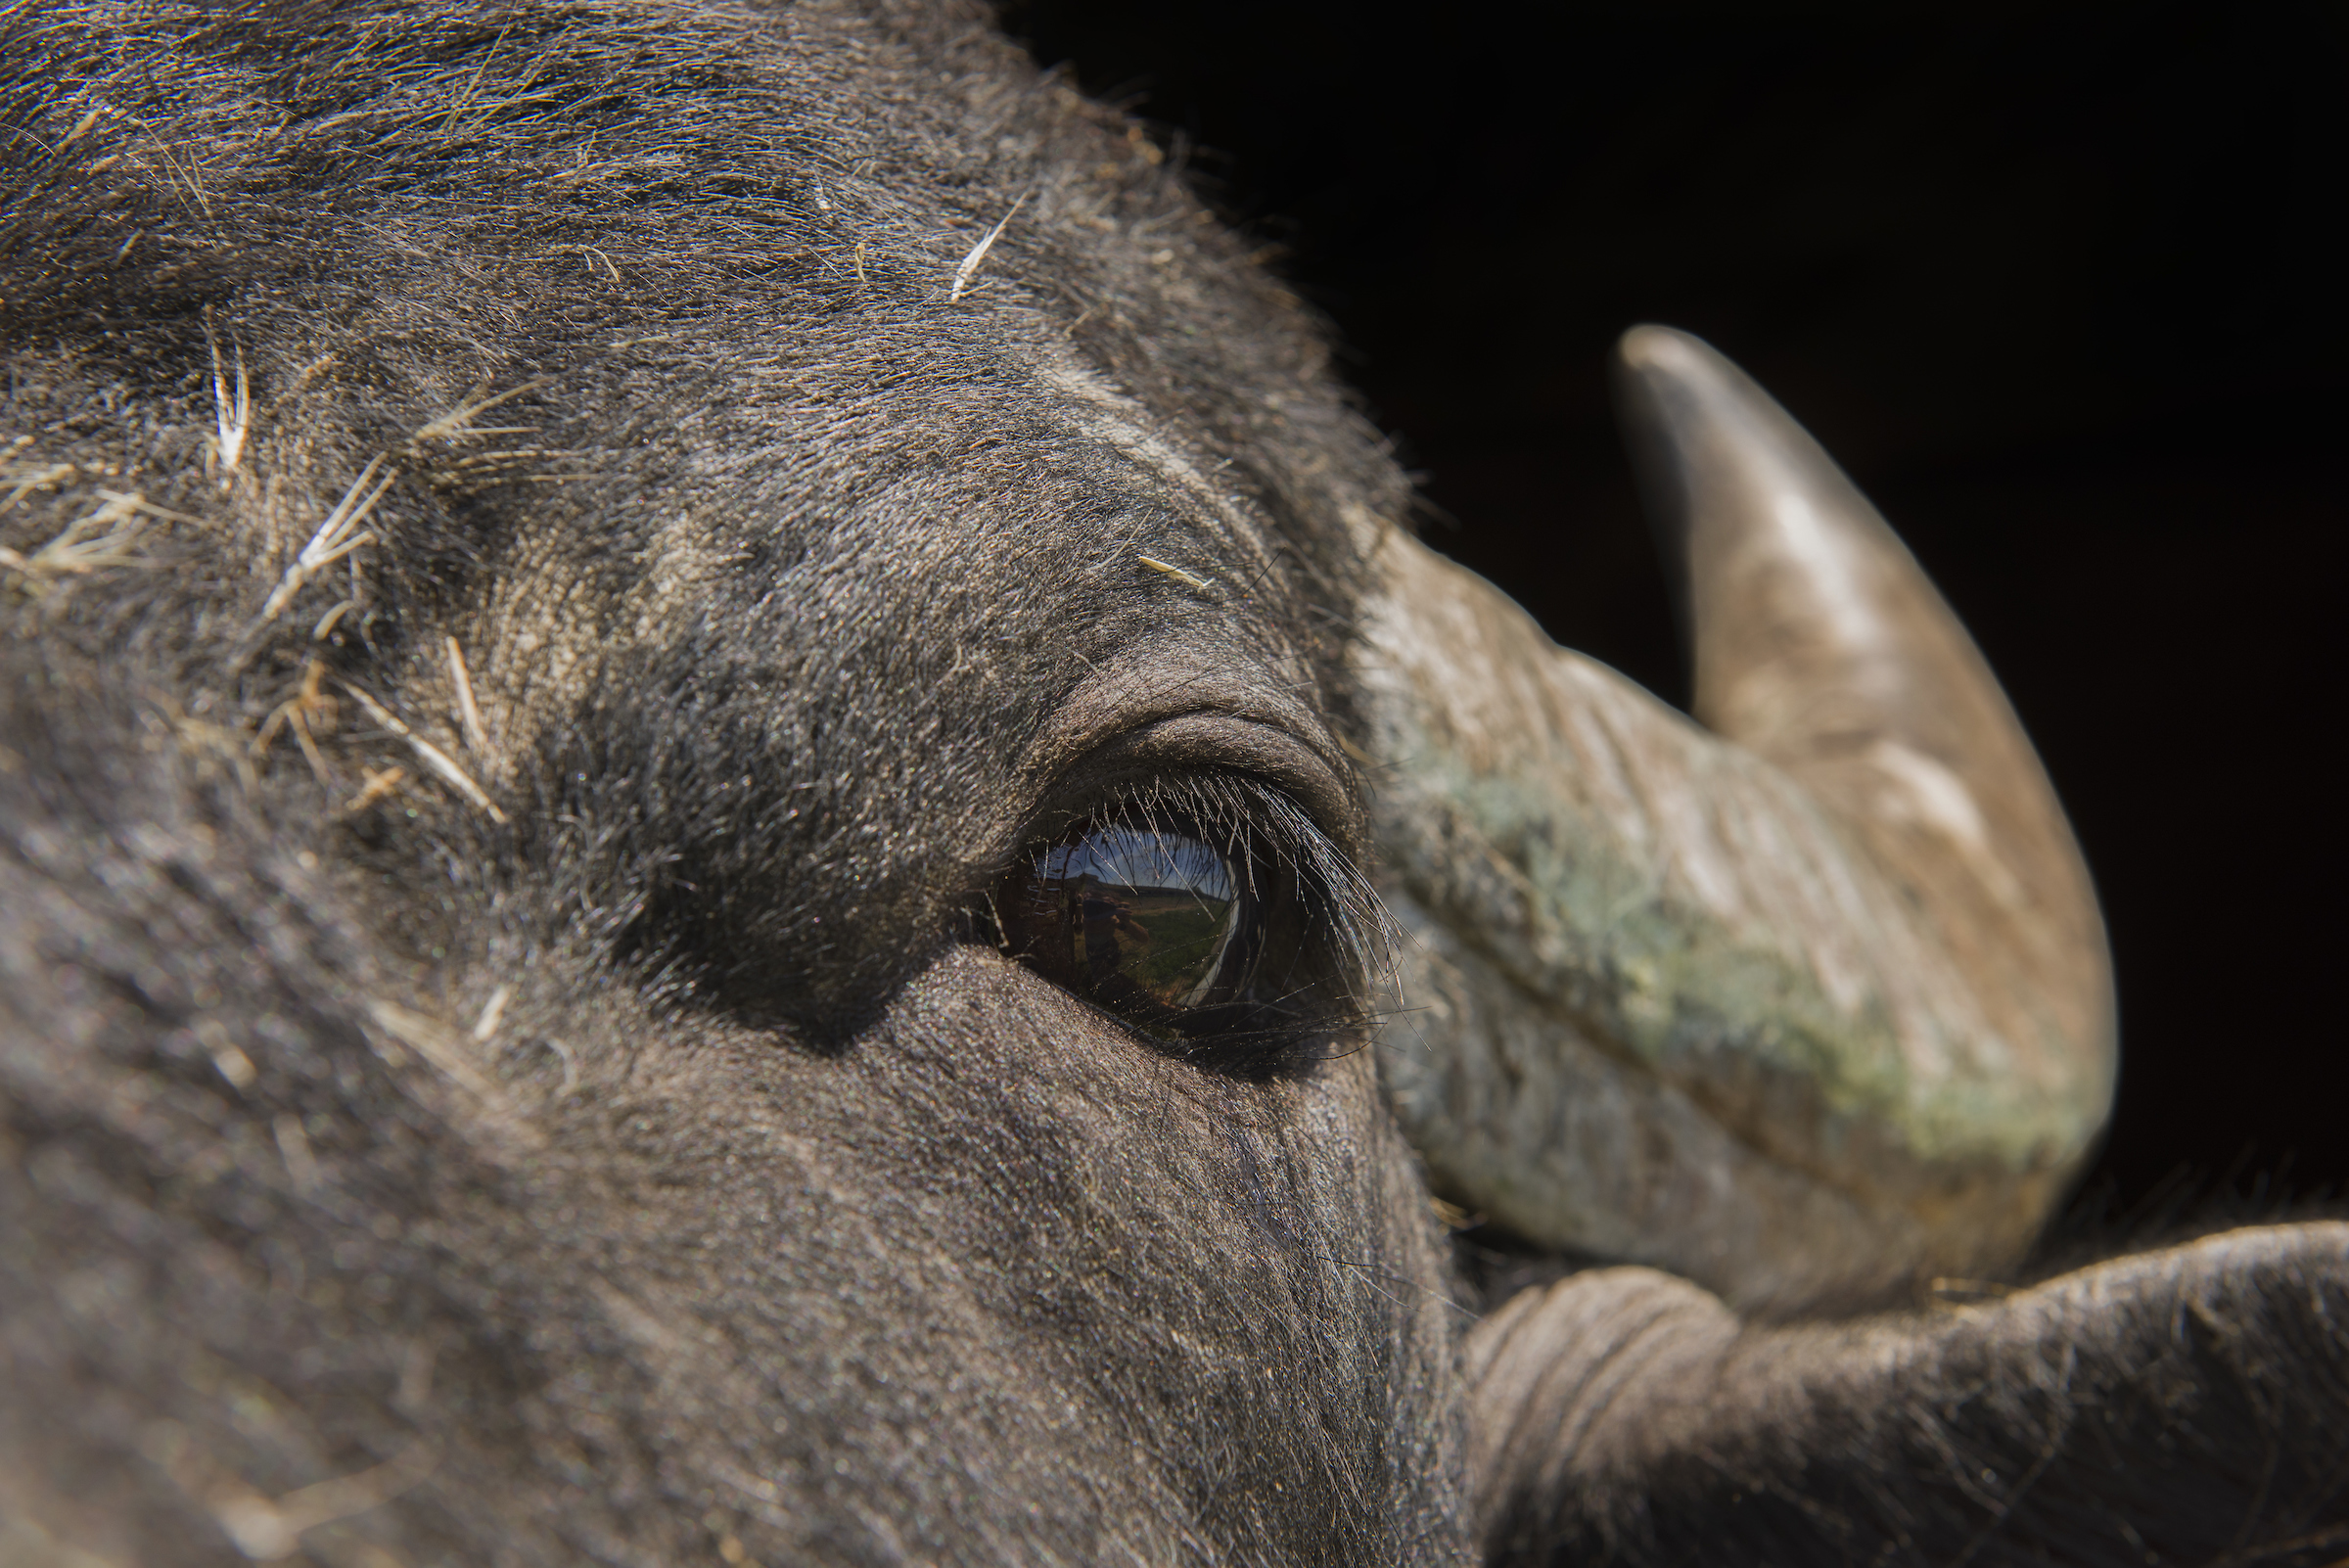 Europe's New Wild - Water buffalo's eye close-up